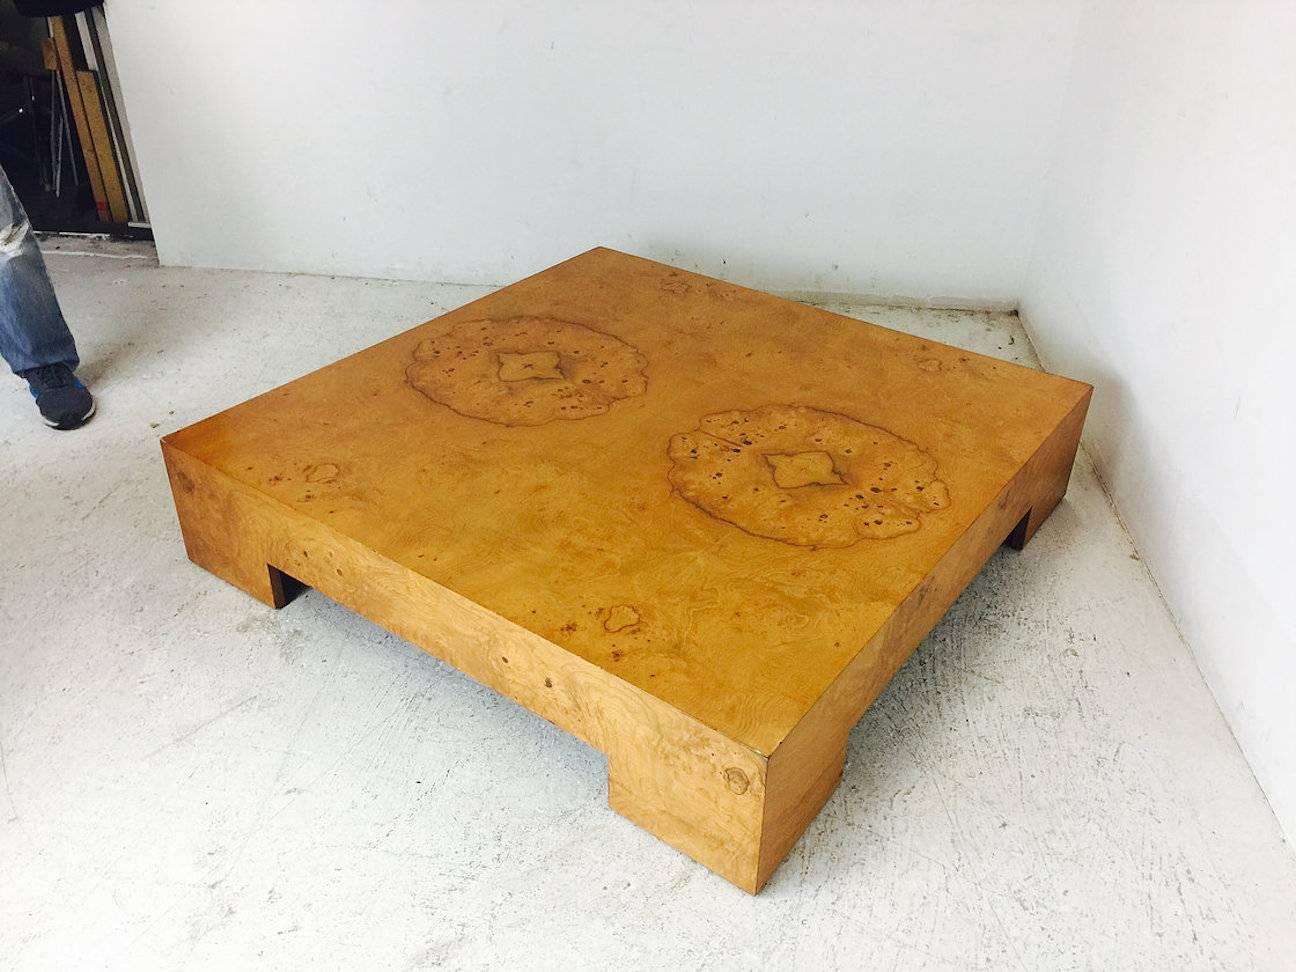 Mid-Century Modern Milo Baughman Burl Wood Coffee Table